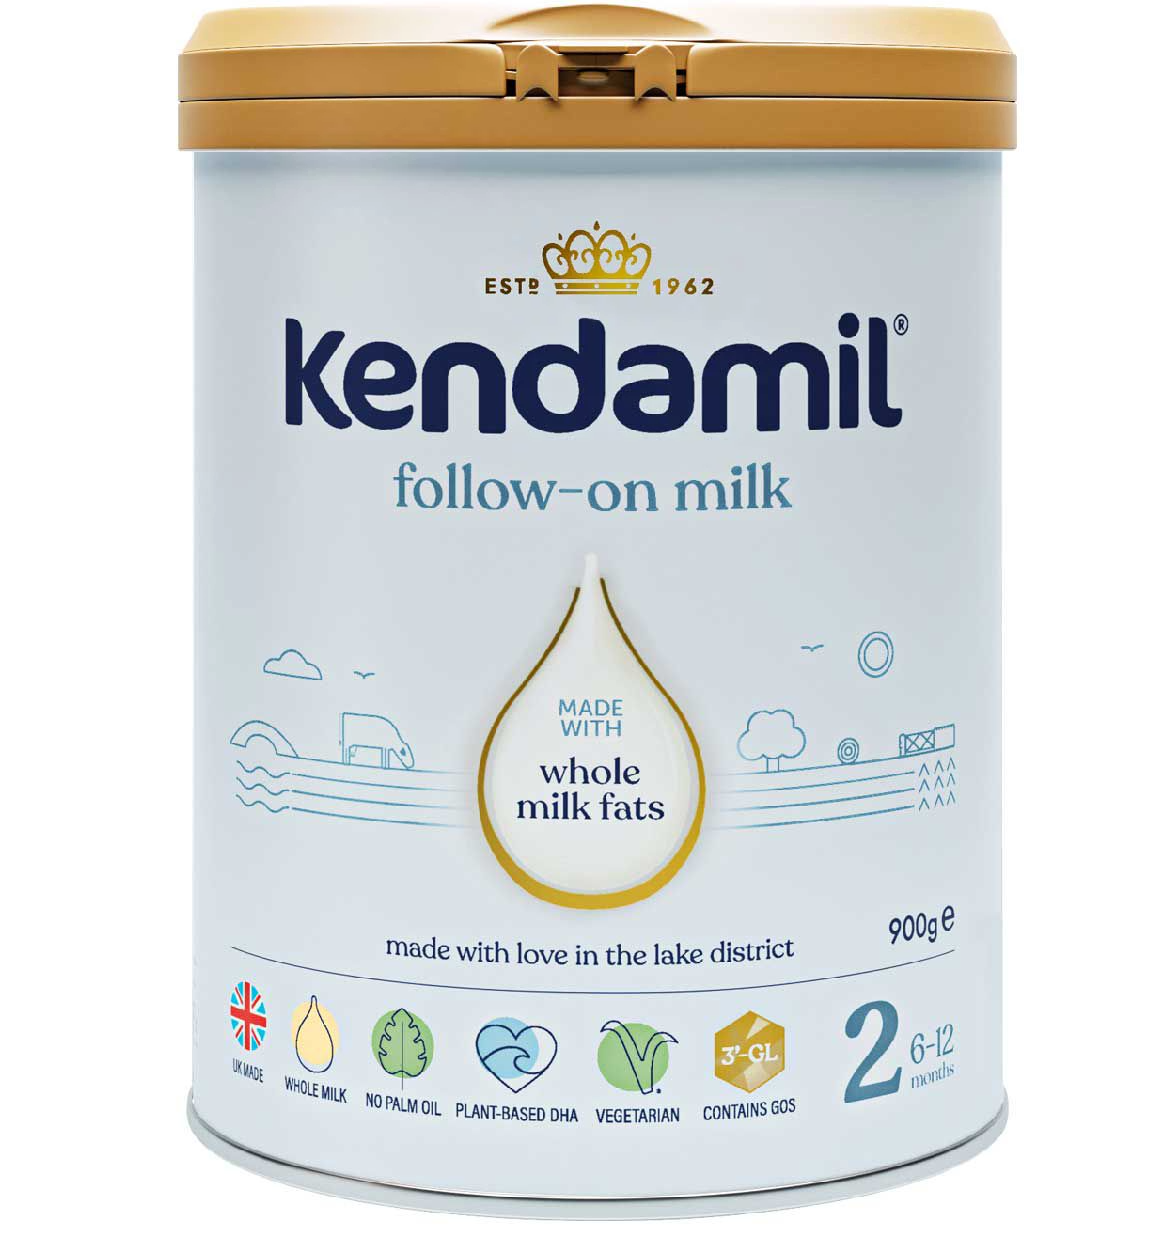 Kendamil Organic Infant Formula … curated on LTK